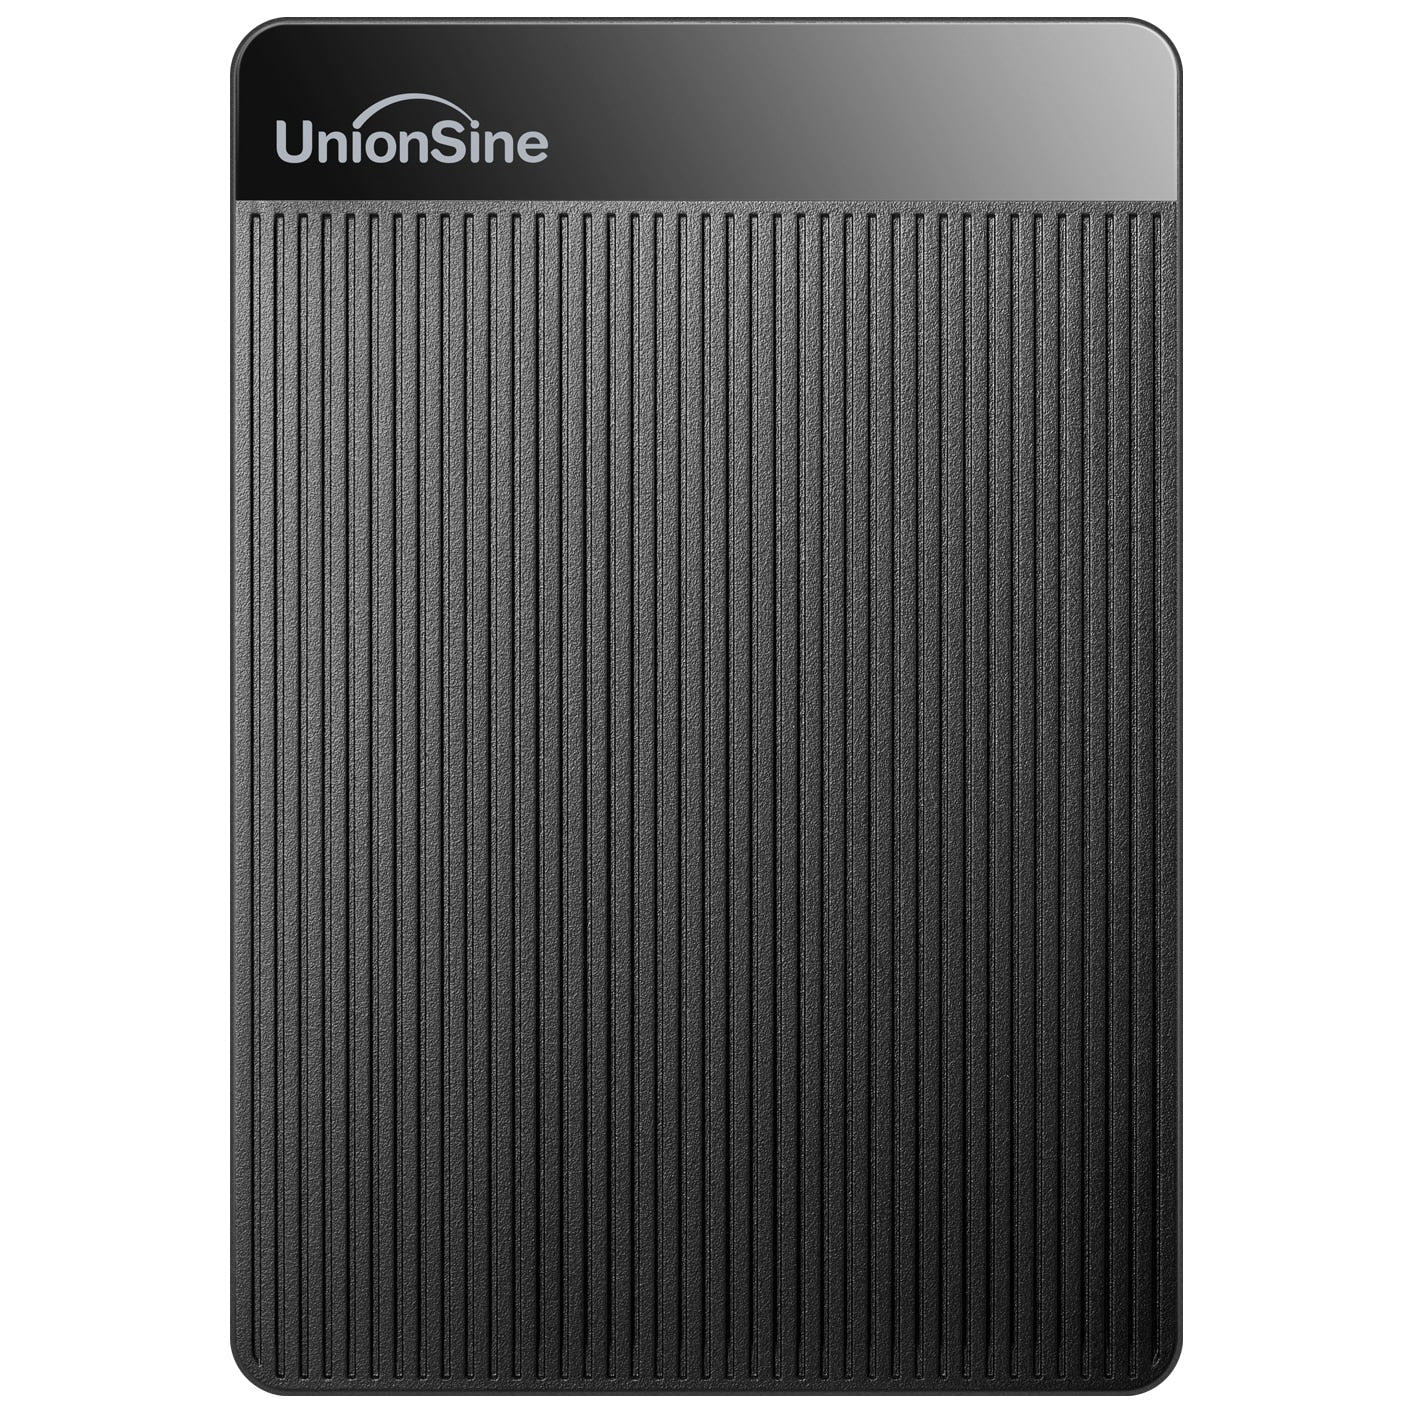 UnionSine HDD 2.5" Portable External Hard Drive 120gb/160gb/250gb USB 3.0 Storage Compatible for PC, Mac, Desktop,MacBook